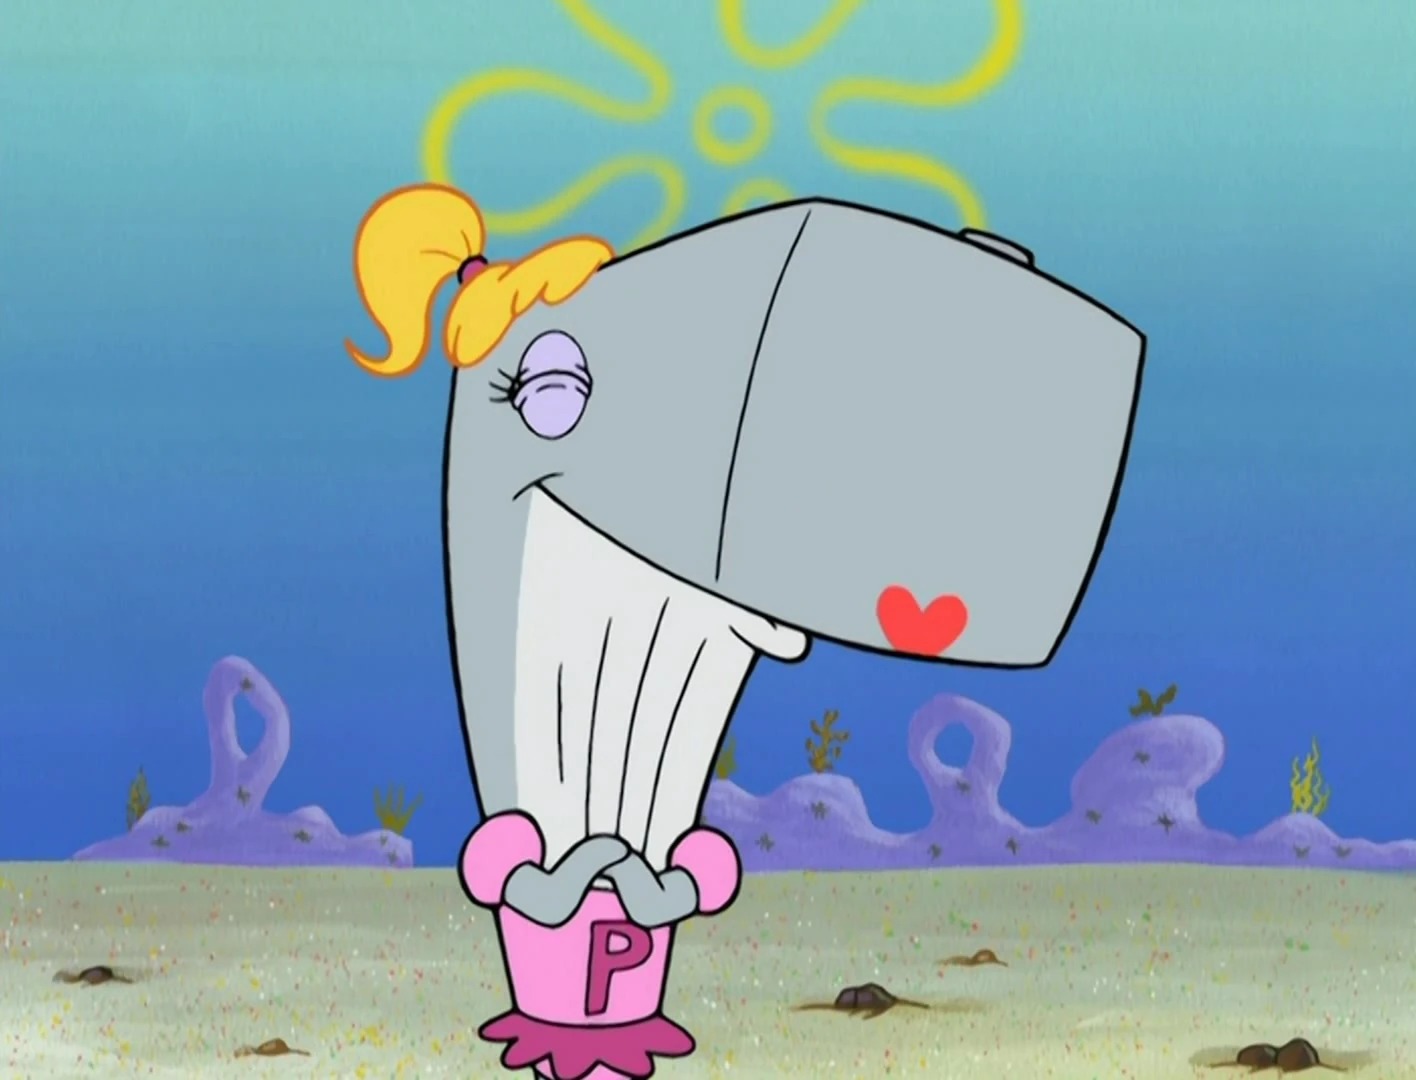 24 Facts About Pearl Krabs (SpongeBob SquarePants) - Facts.net